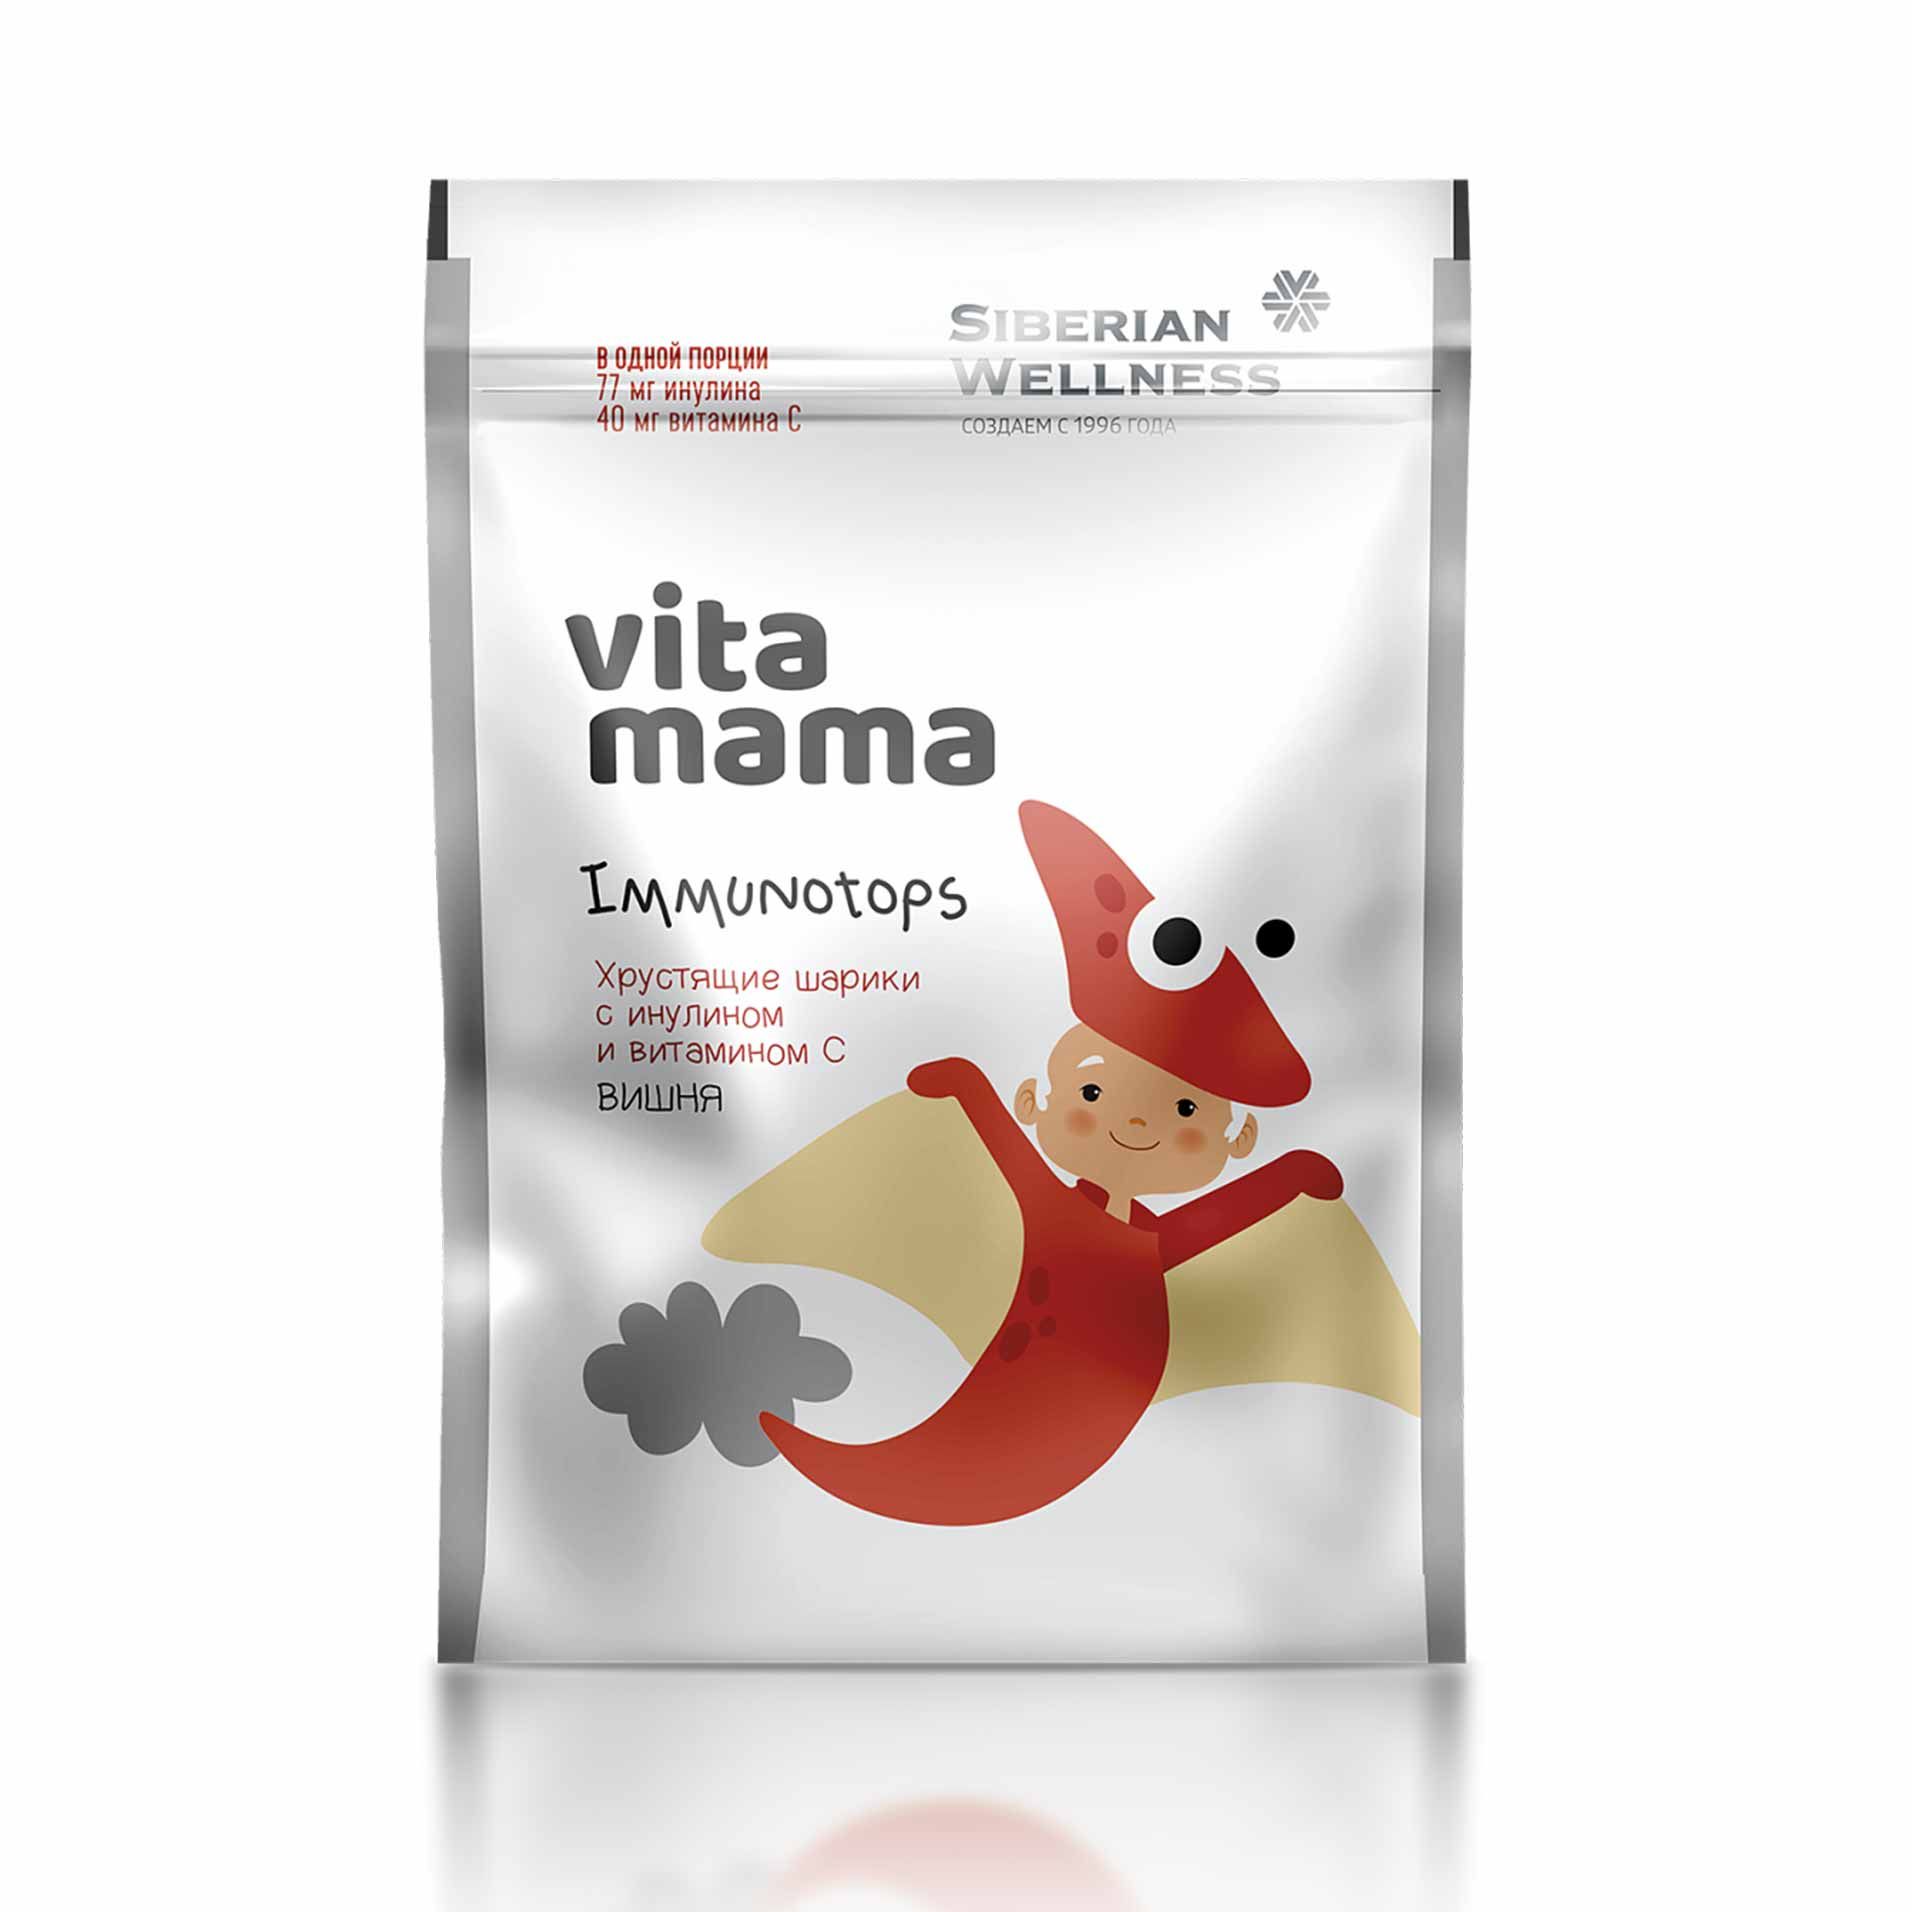 Vitamama - Immunotops, хрустящие шарики с инулином (вишня)